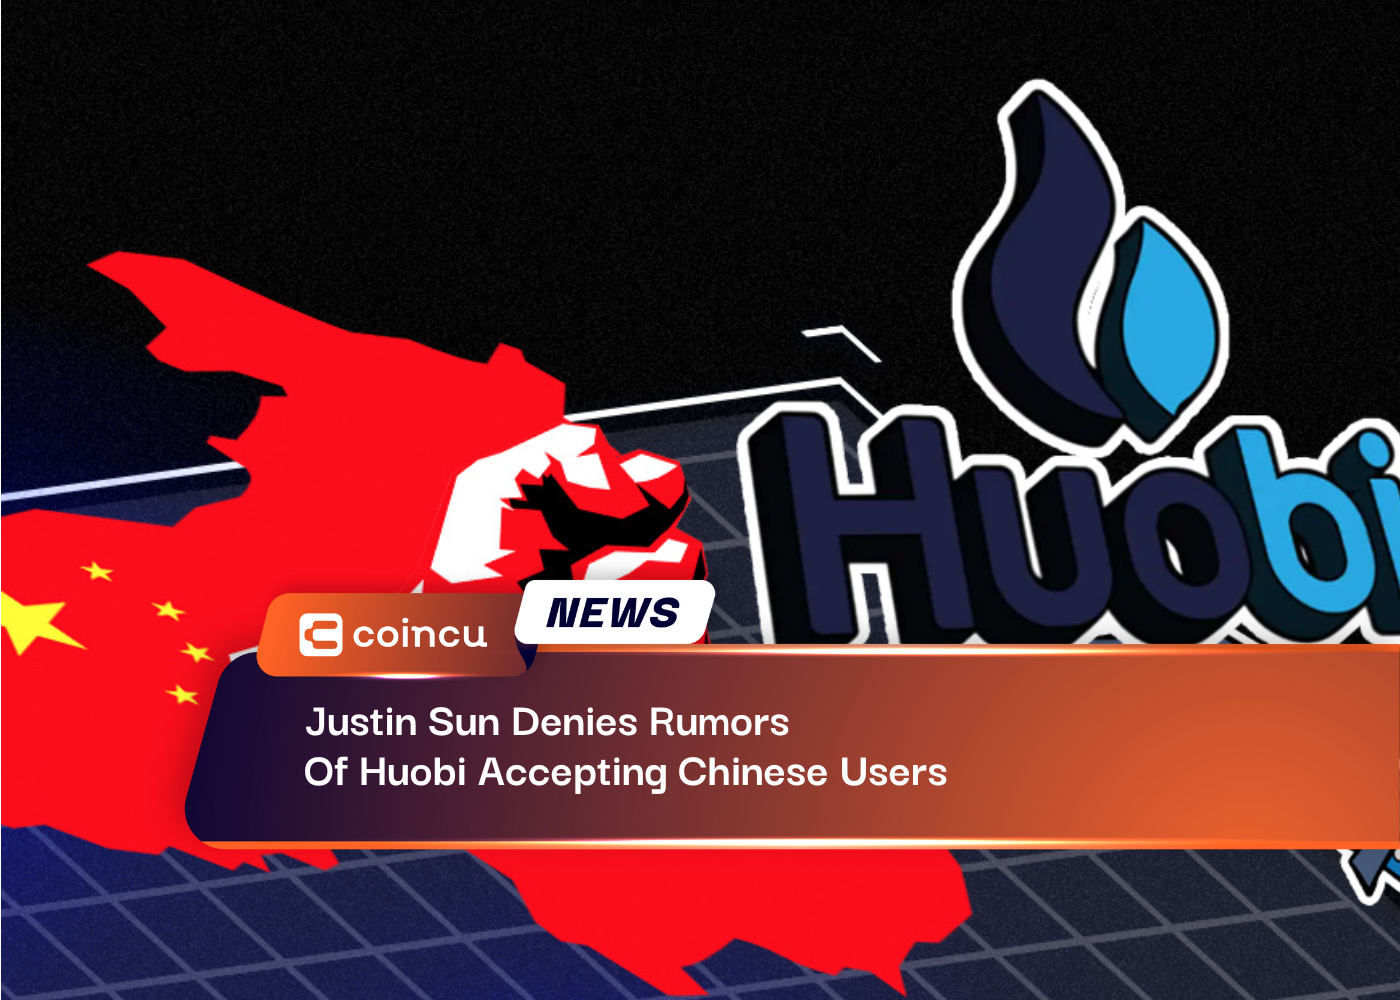 Justin Sun Denies Rumors Of Huobi Accepting Chinese Users